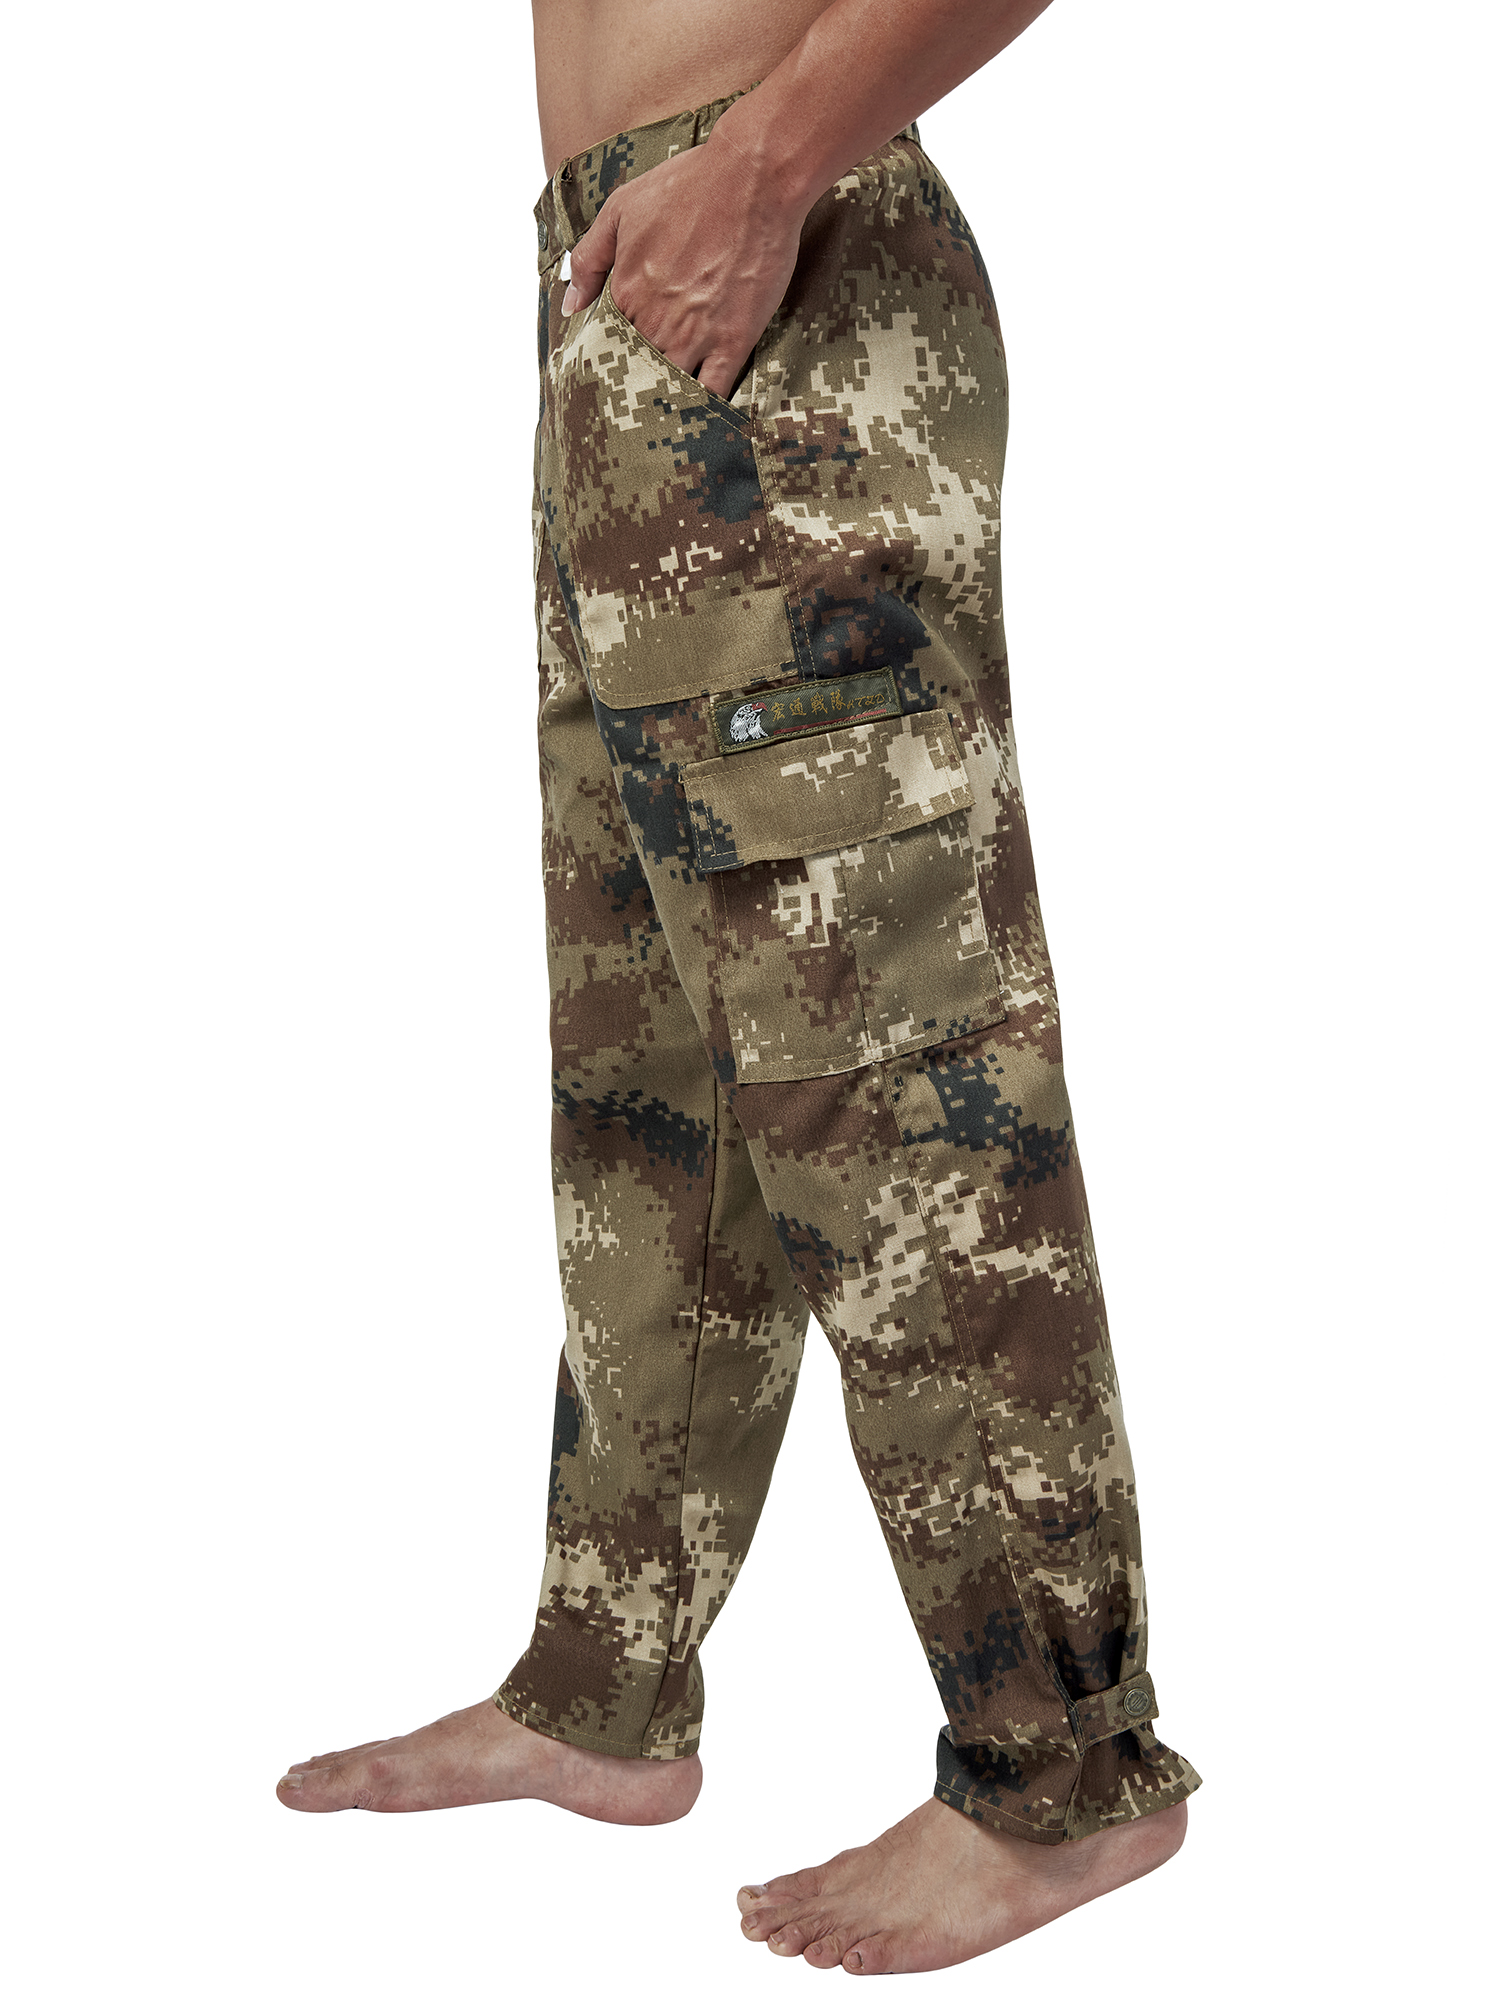 FOCUSSEXY Men Comfort Cargo Pant Tactical Combat Cargo Pocket Long Pants Work Wear Casual Bottoms Outdoor Camo Stretch Cargo Pants - image 5 of 7